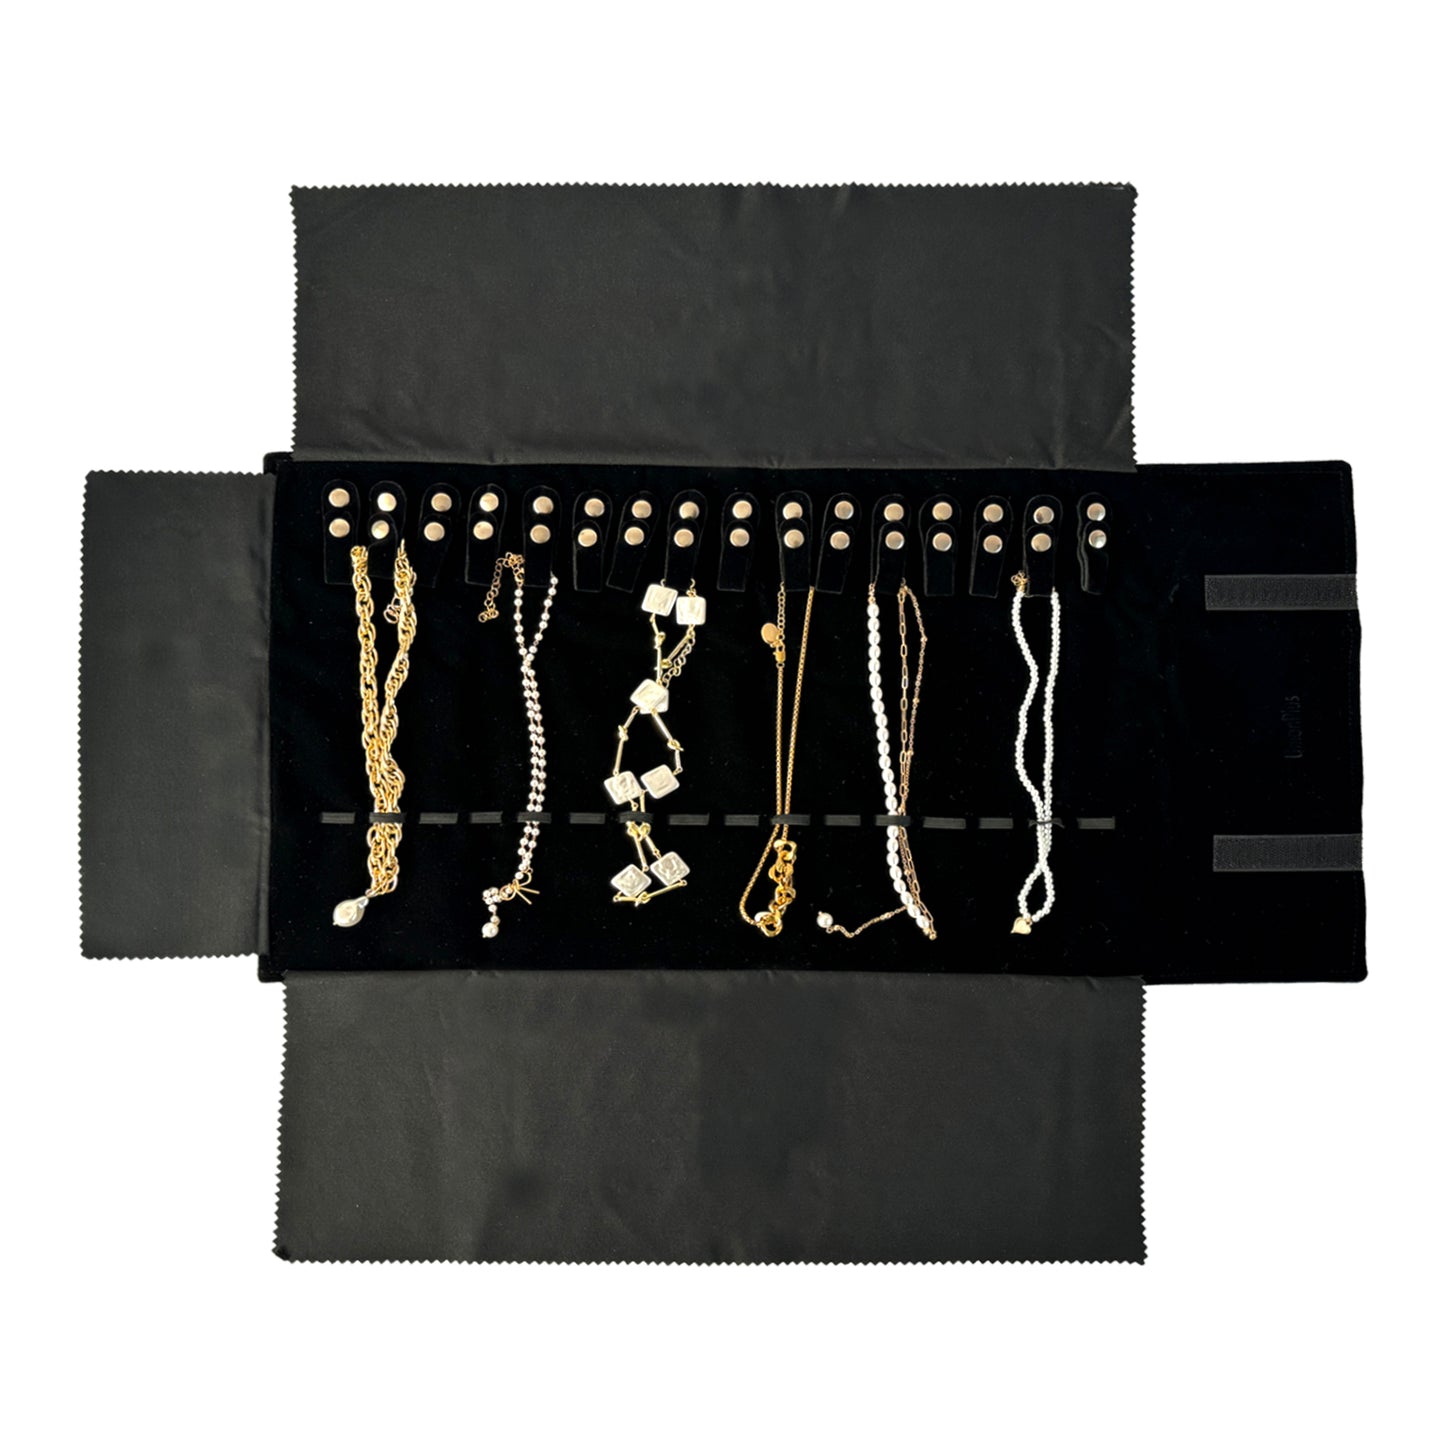 UnionPlus Velvet Travel Jewelry Roll Bag Organizer for Necklace, Elastic Band and Anti-winding, Medium Size